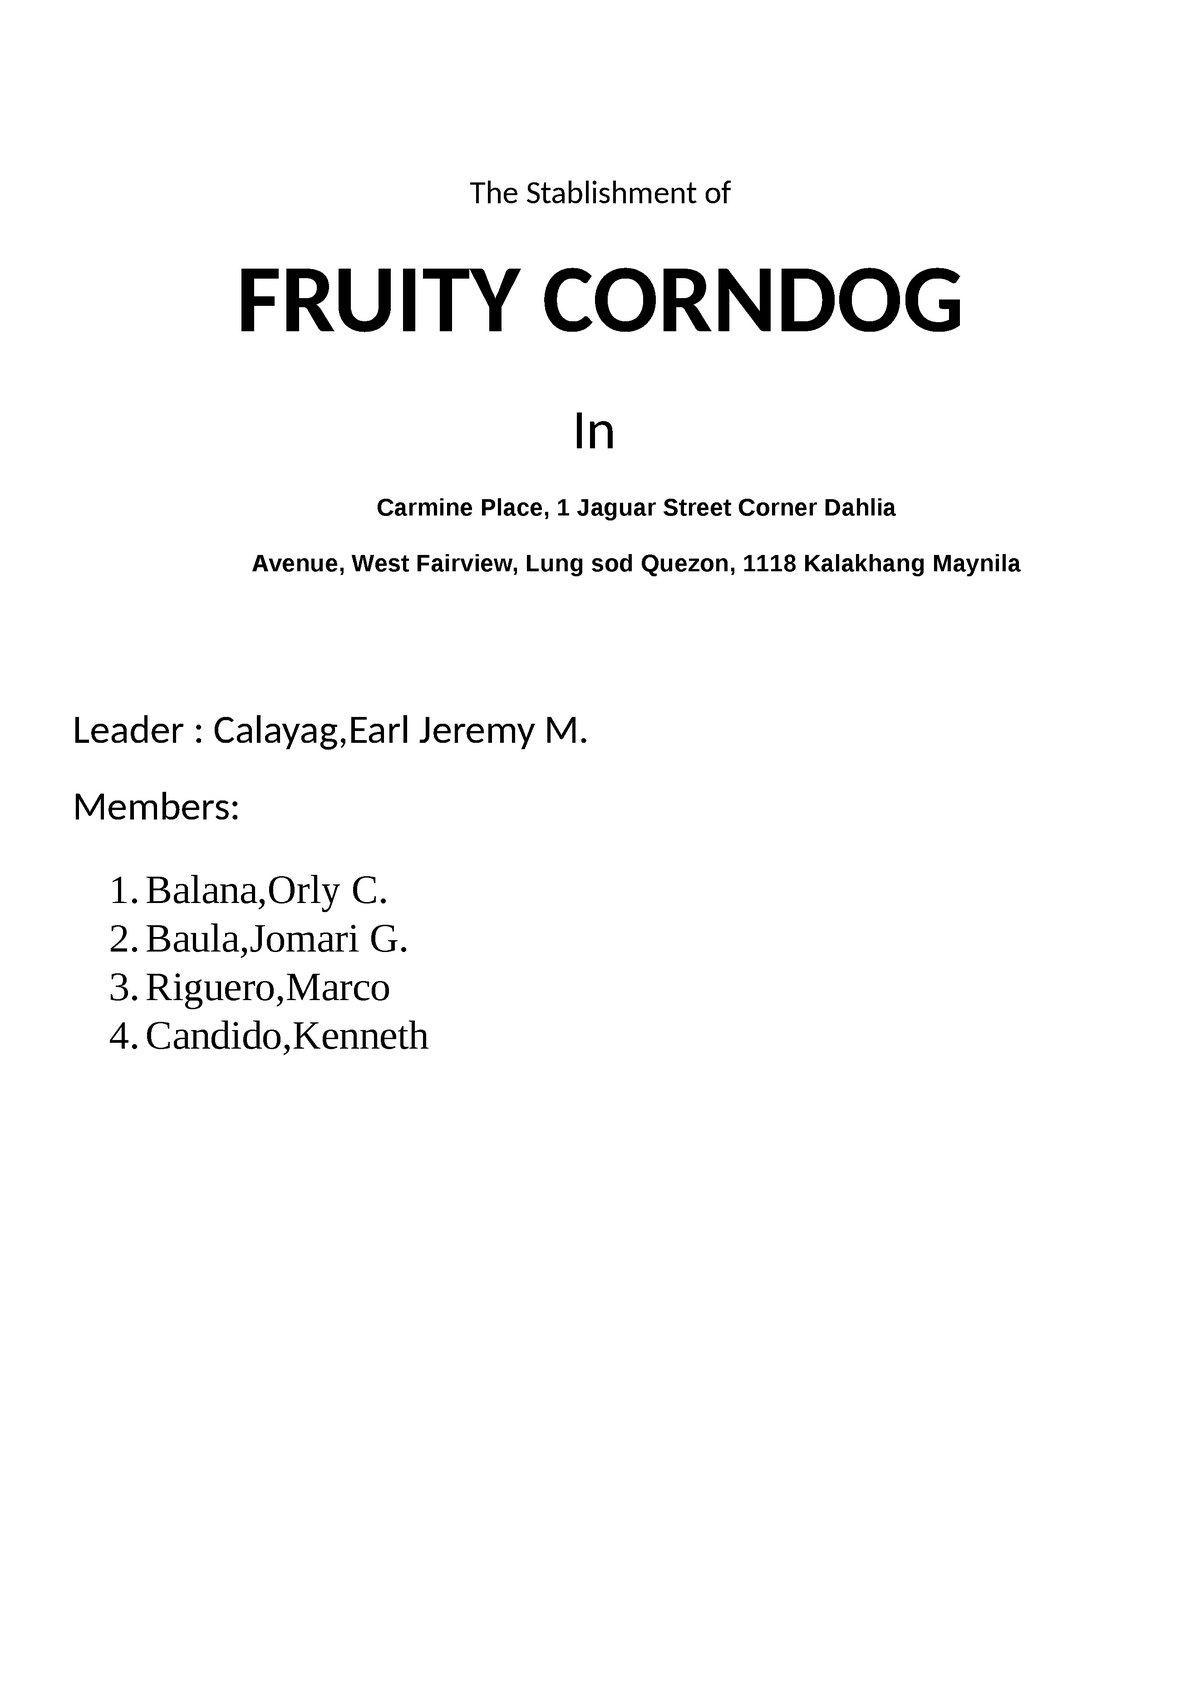 corndog business plan introduction